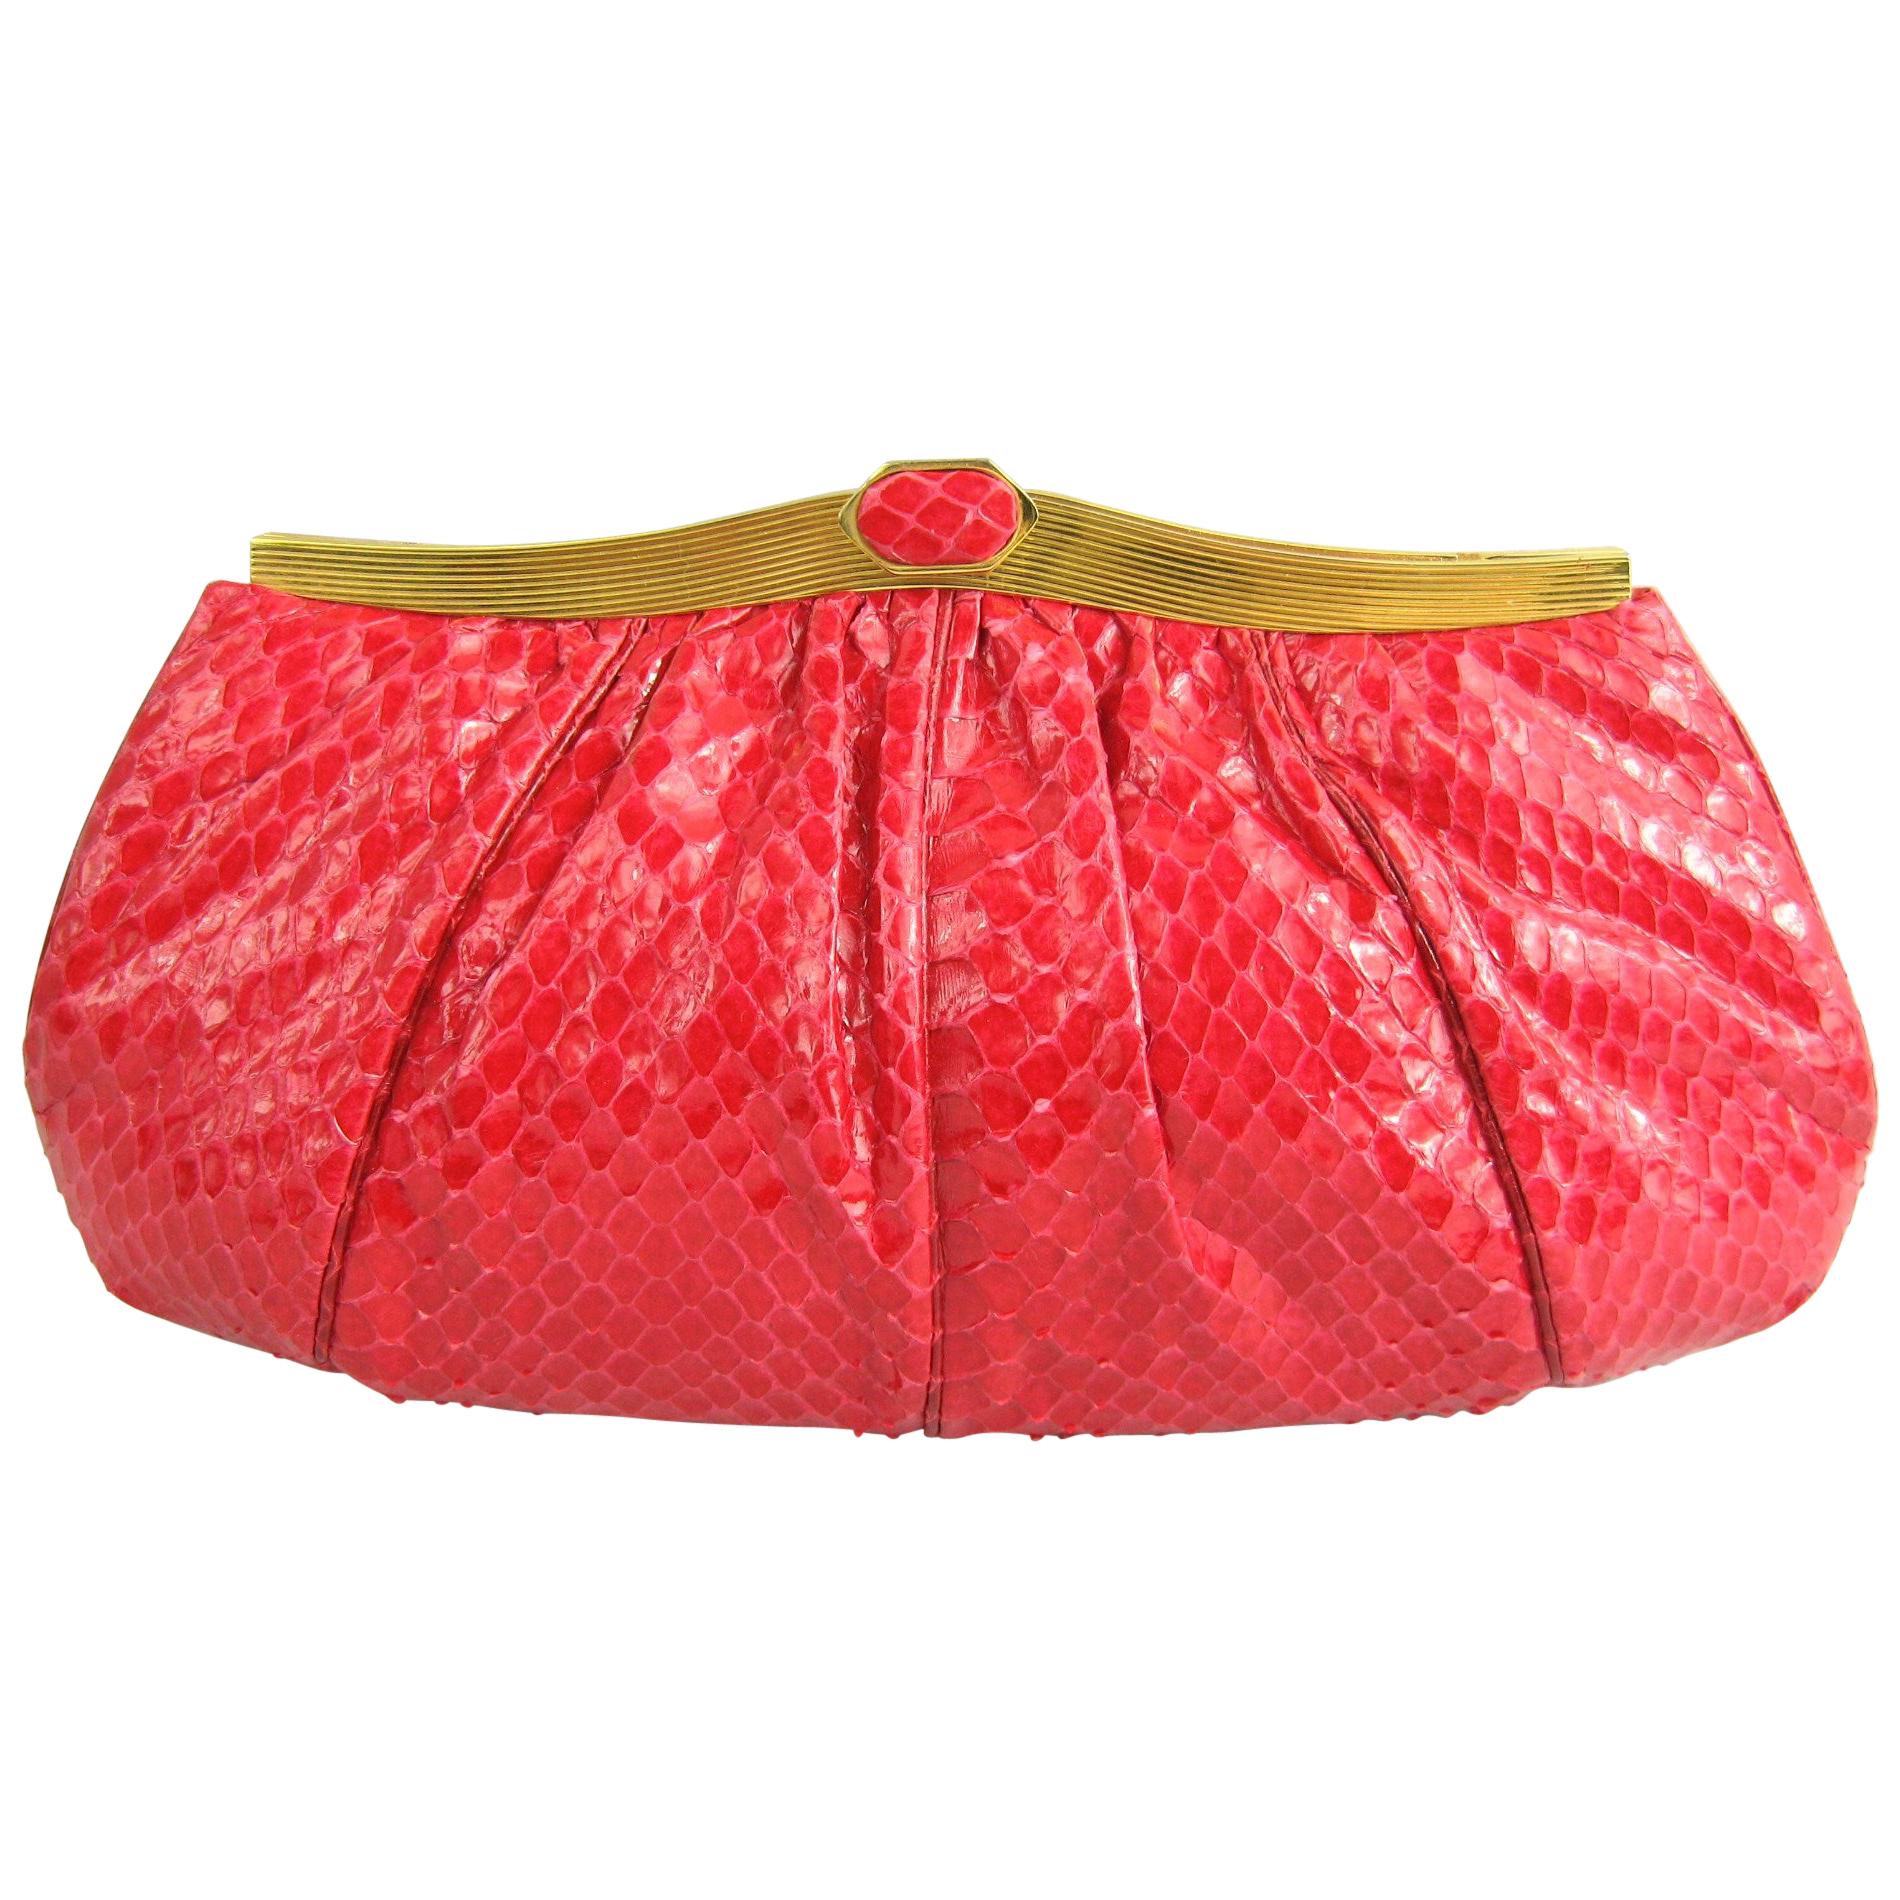 Judith Leiber Red Snake Skin Clutch Handbag 